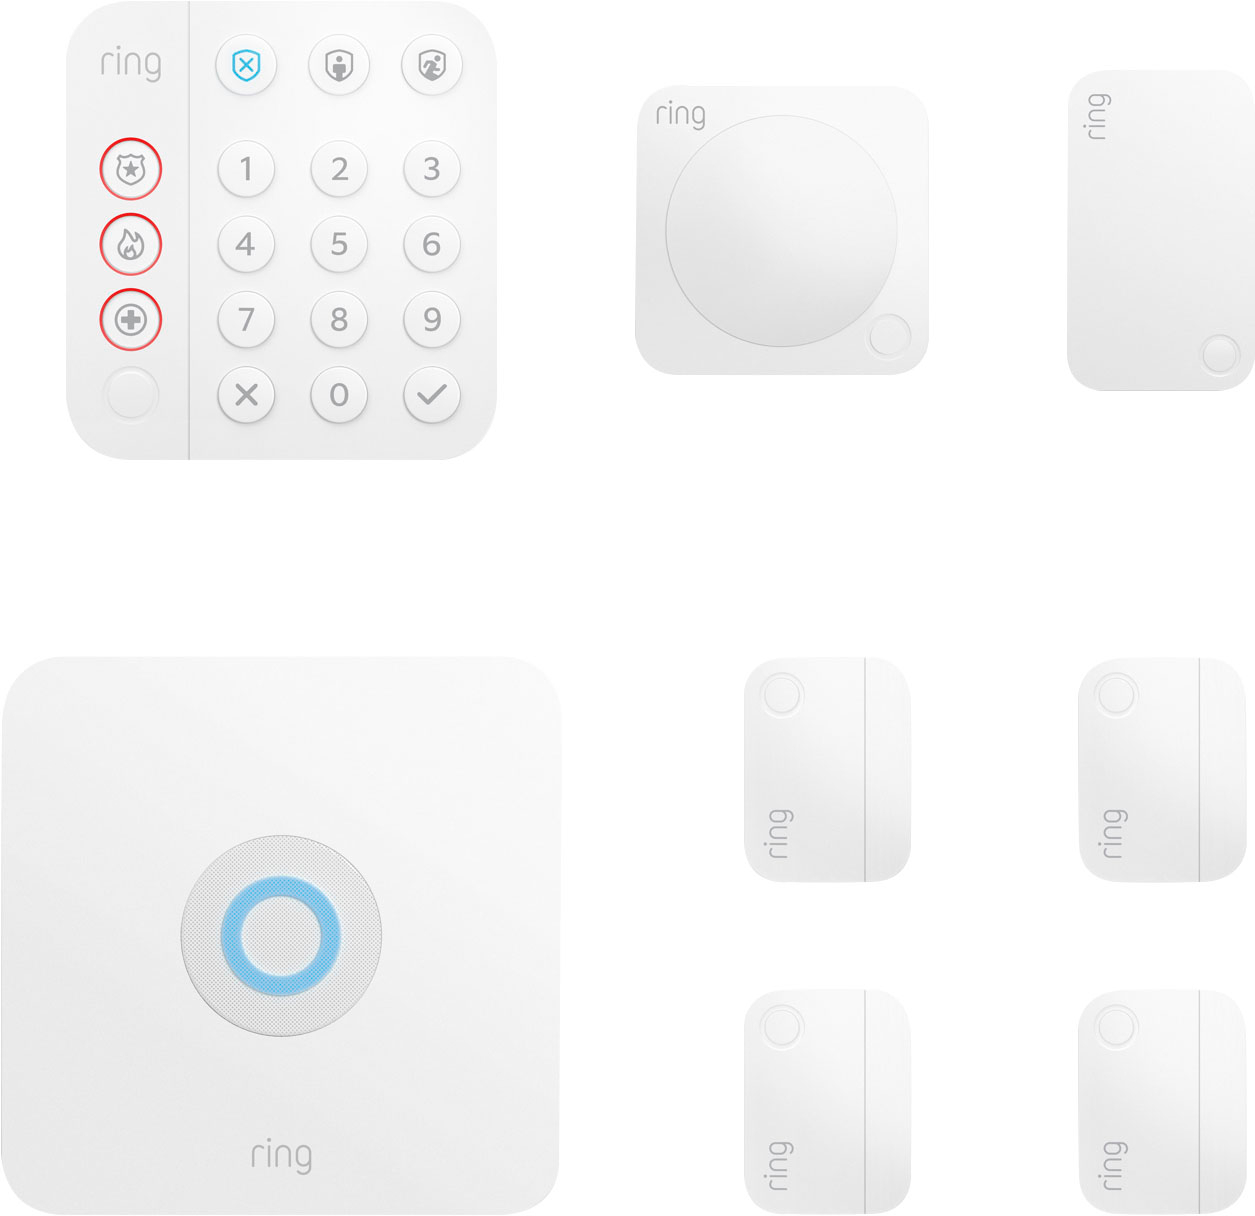 Ring Alarm review: Easy to install Smart Home Alarm System - Tech Advisor